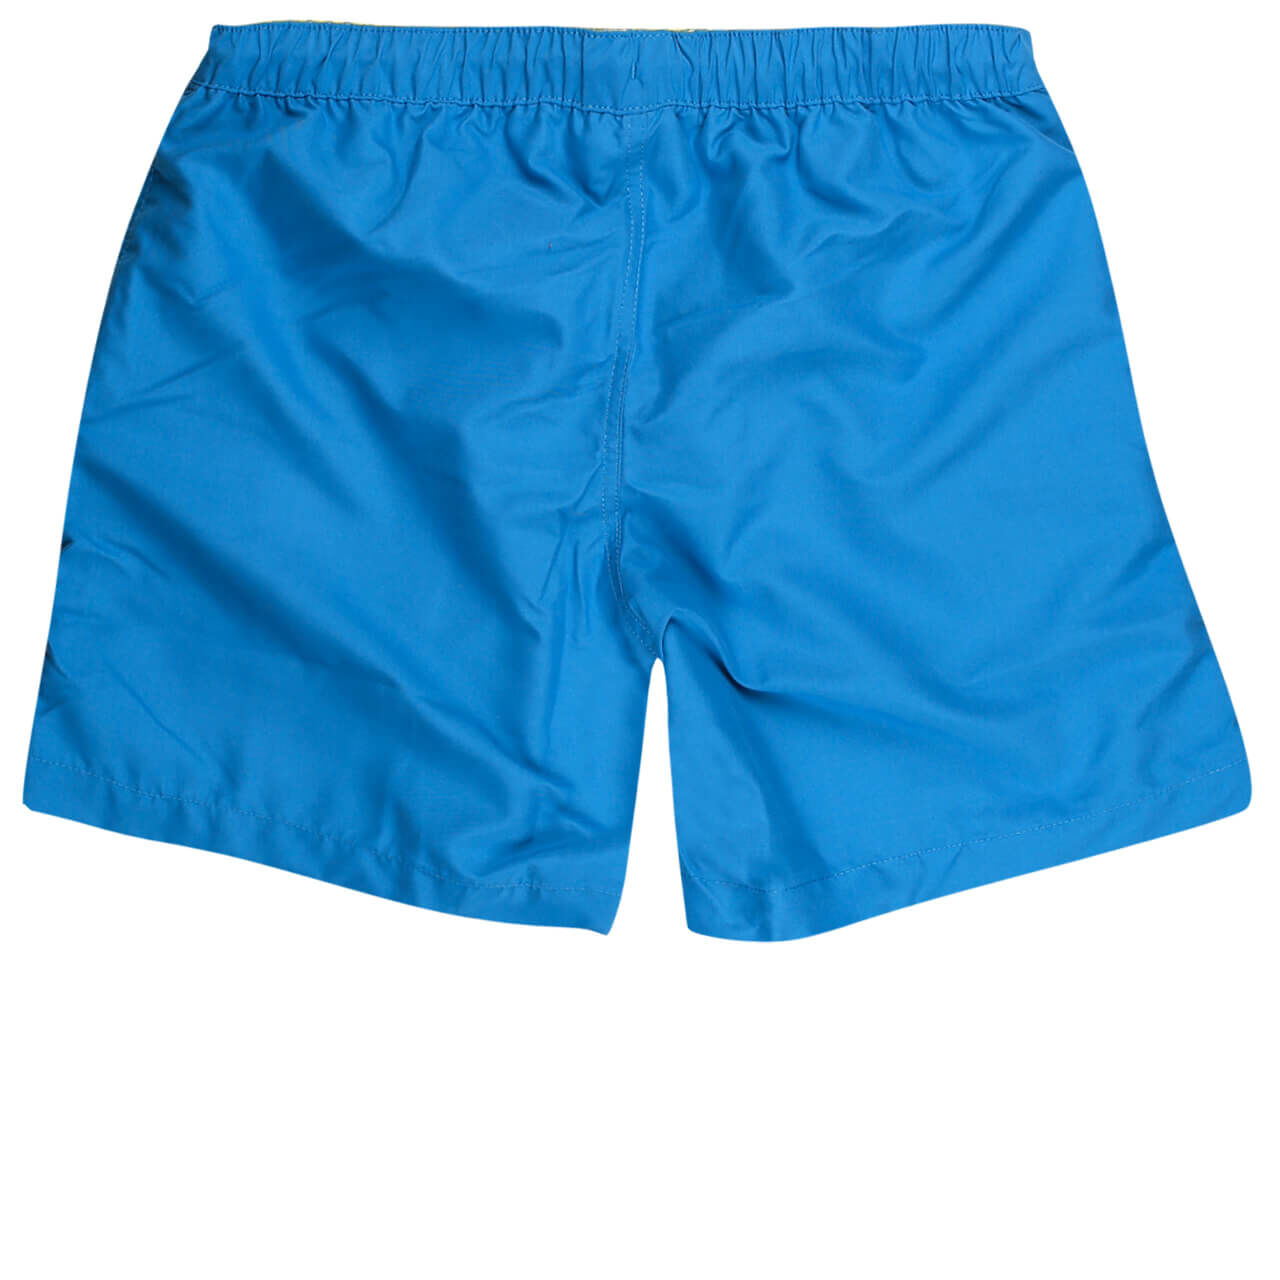 Tom Tailor Swim Shorts für Herren in Ozeanblau, FarbNr.: 28853